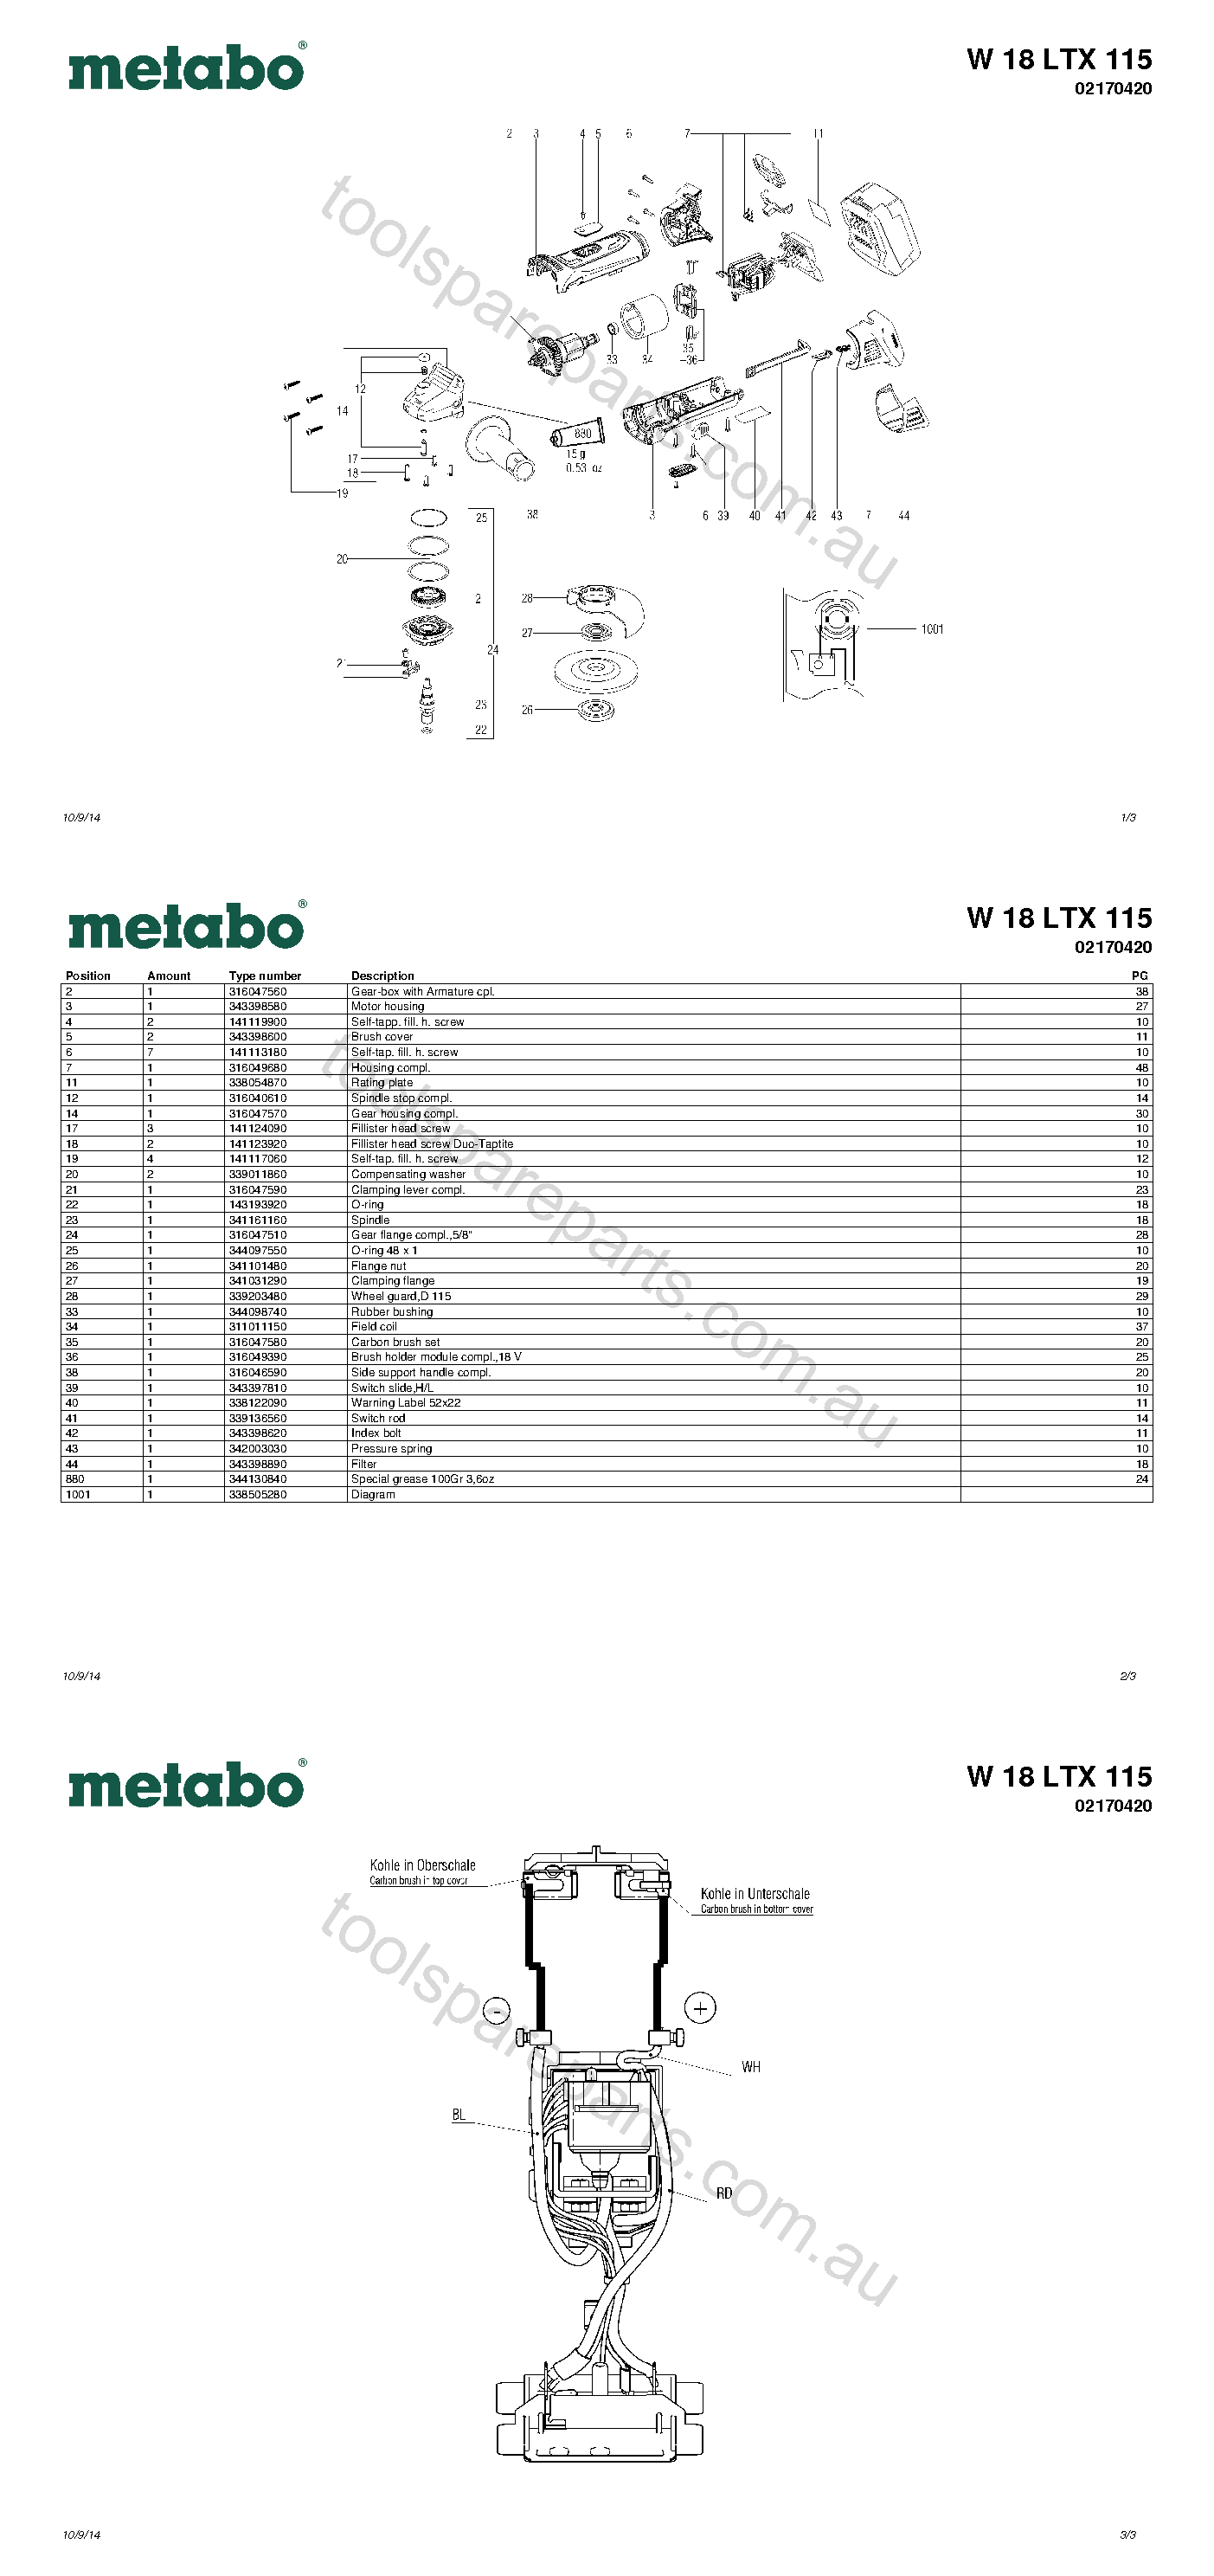 Metabo W 18 LTX 115 02170420  Diagram 1